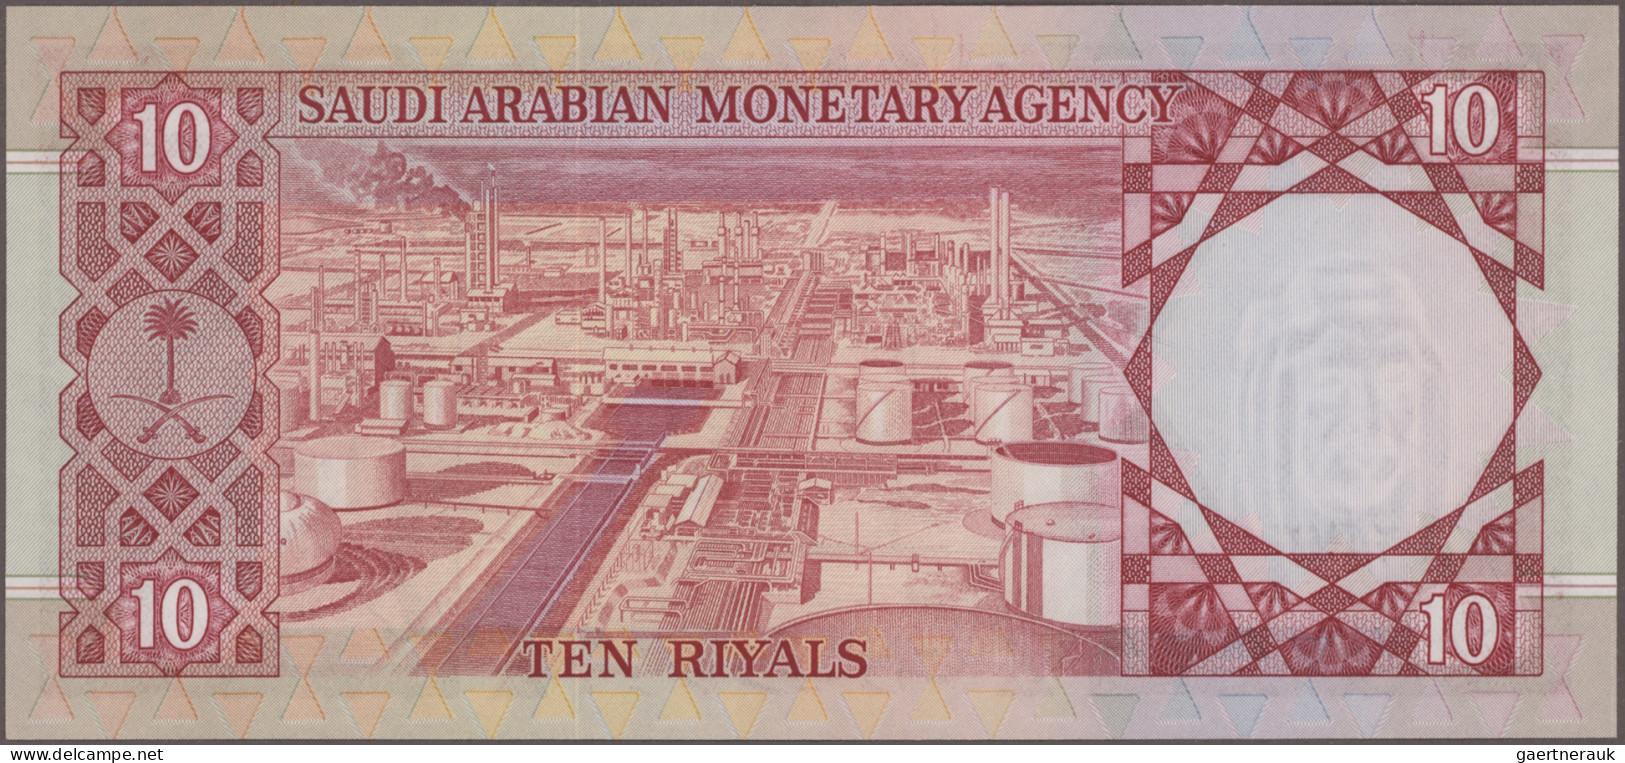 Saudi Arabia: Saudi Arabian Monetary Agency, lot with 4 banknotes, series AH1379